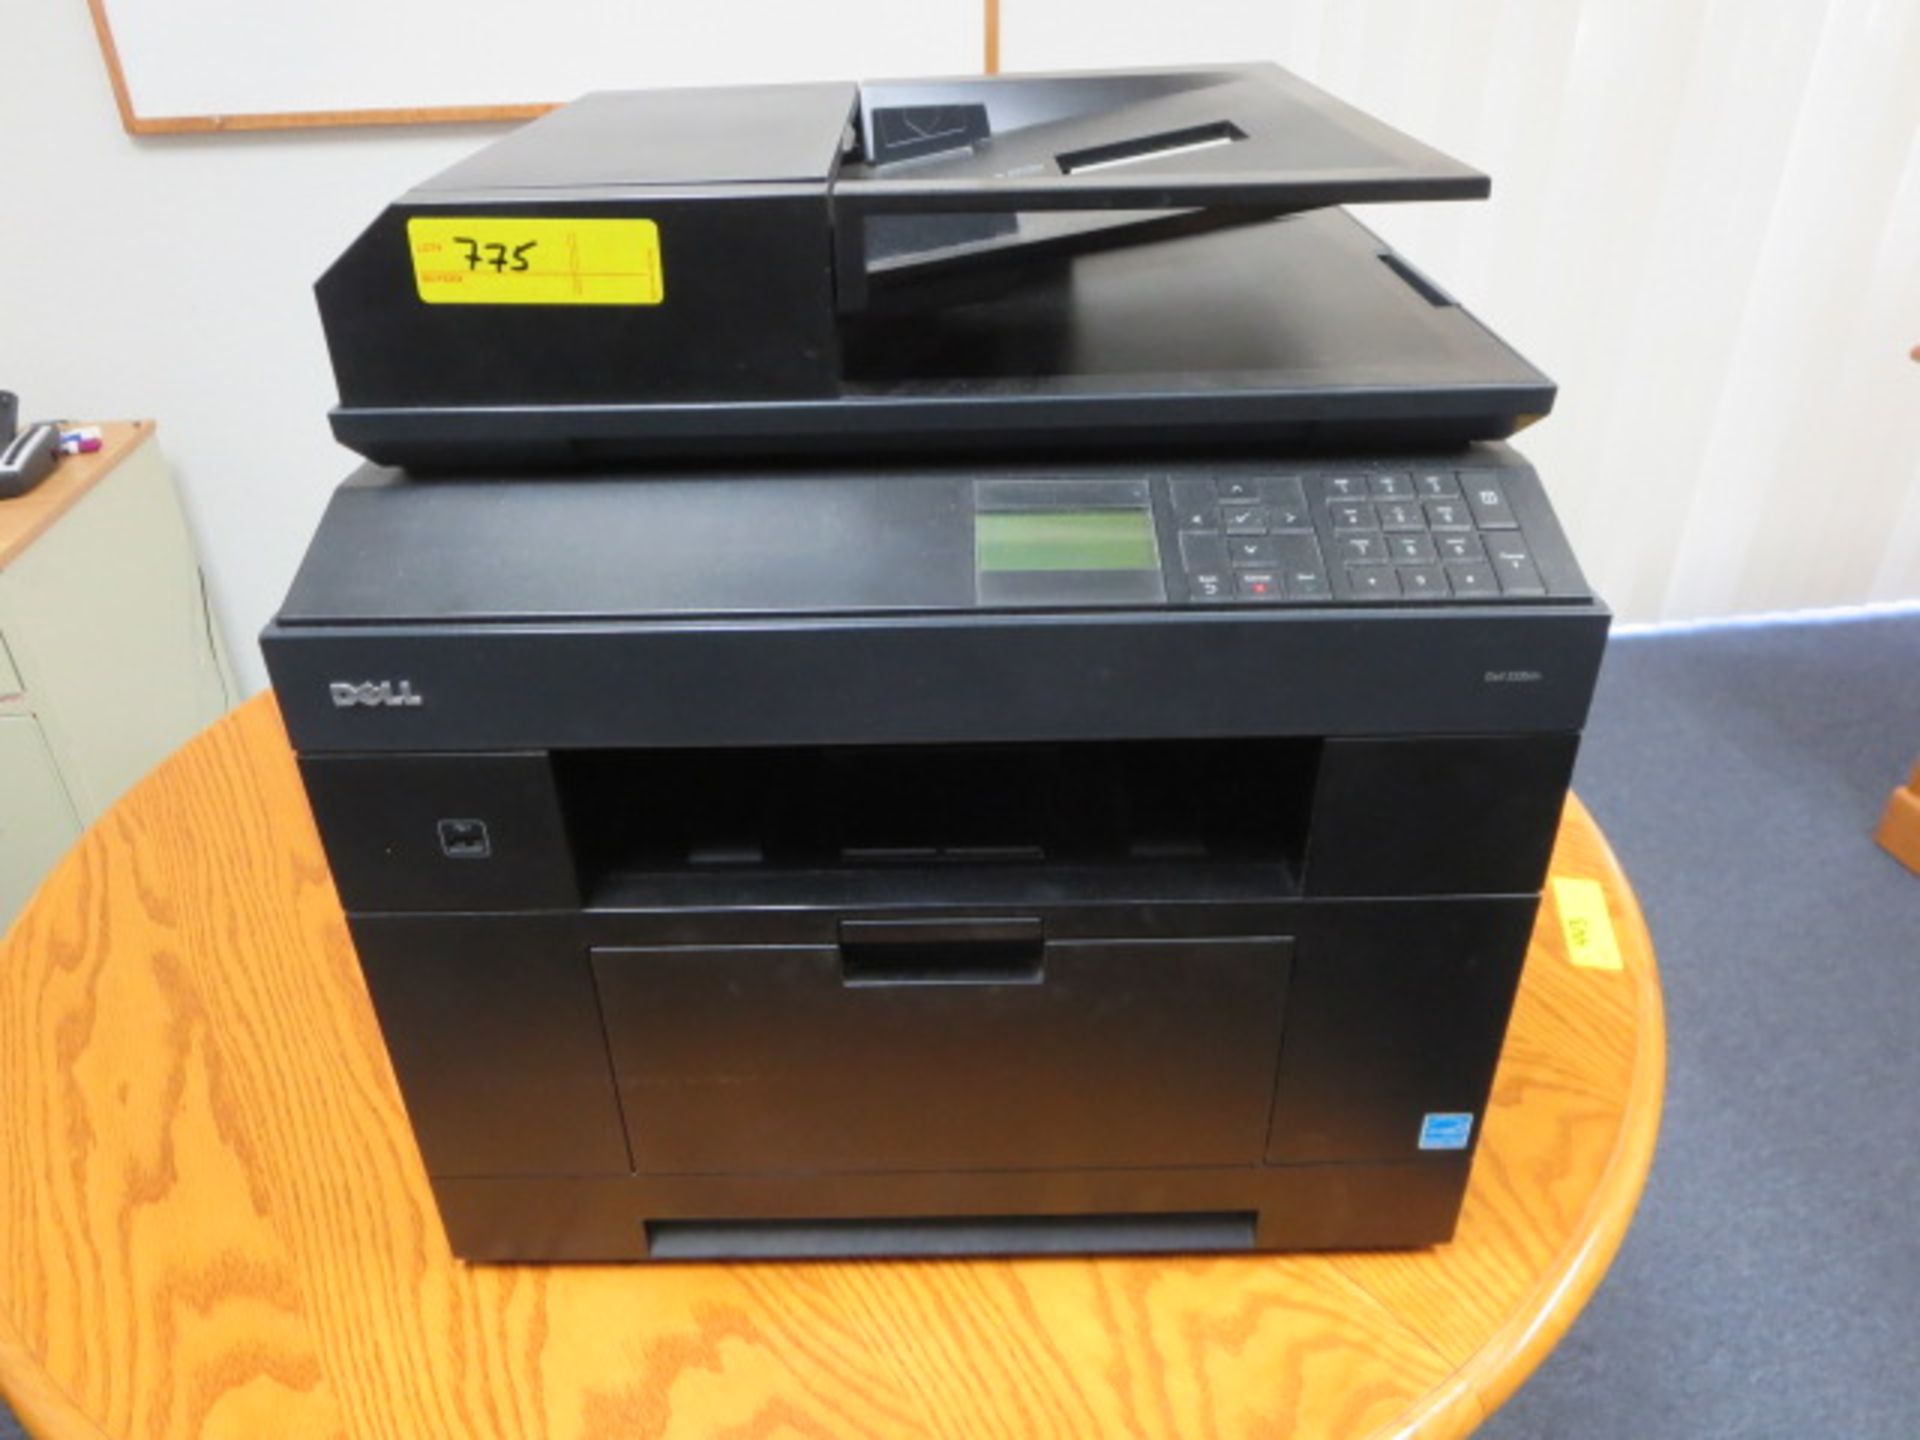 Dell All-In-One Printer, model 2335dn